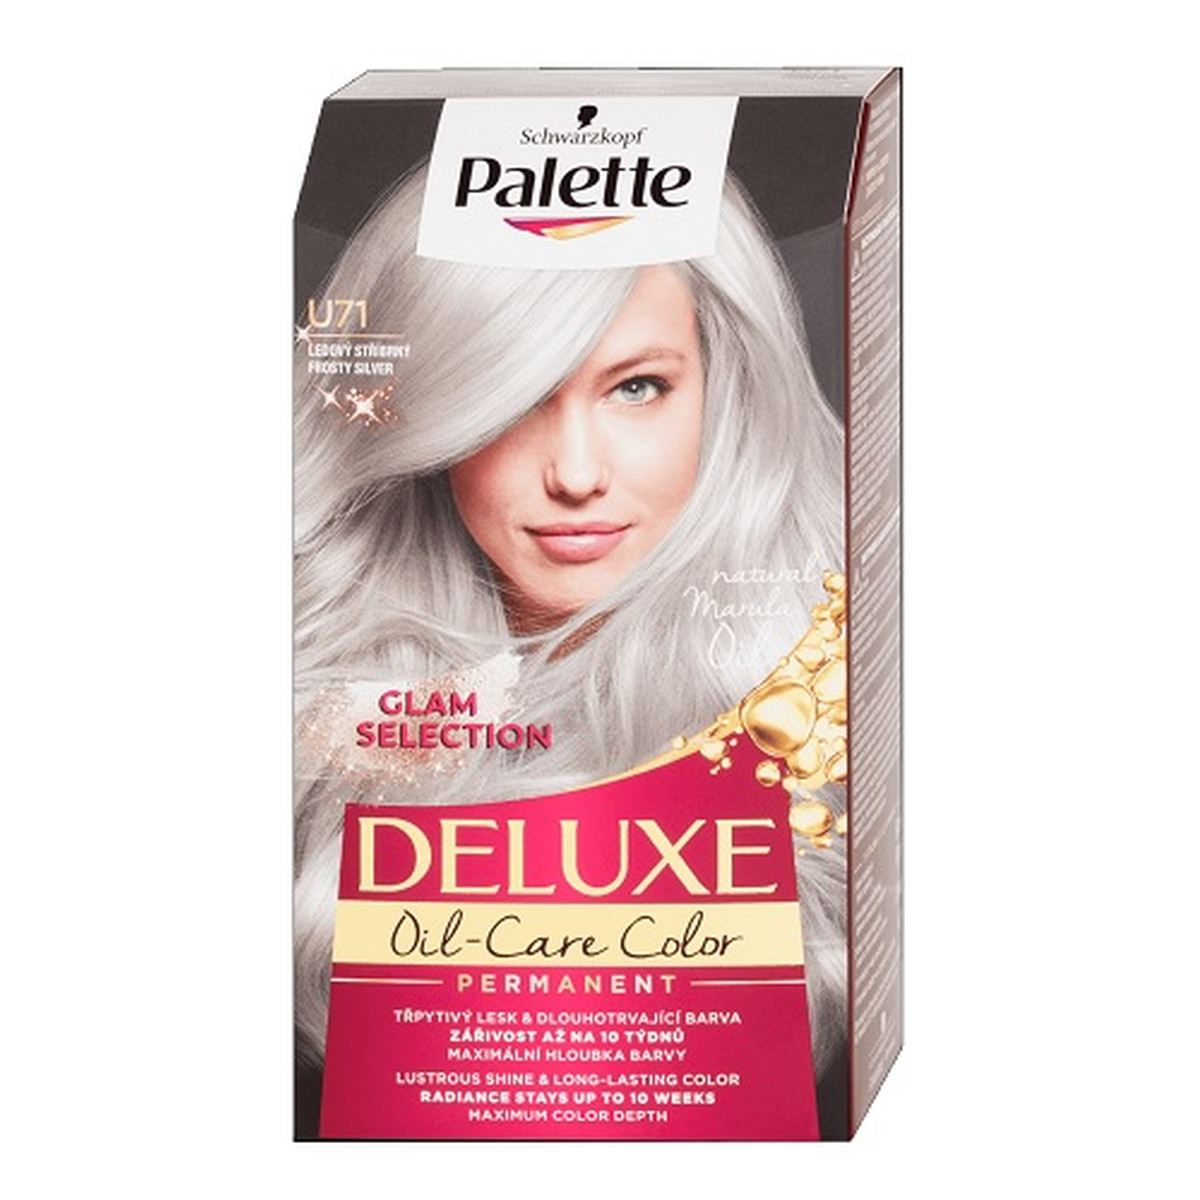 Palette Deluxe oil-care color farba do włosów trwale koloryzująca z mikroolejkami u71 mroźne srebro